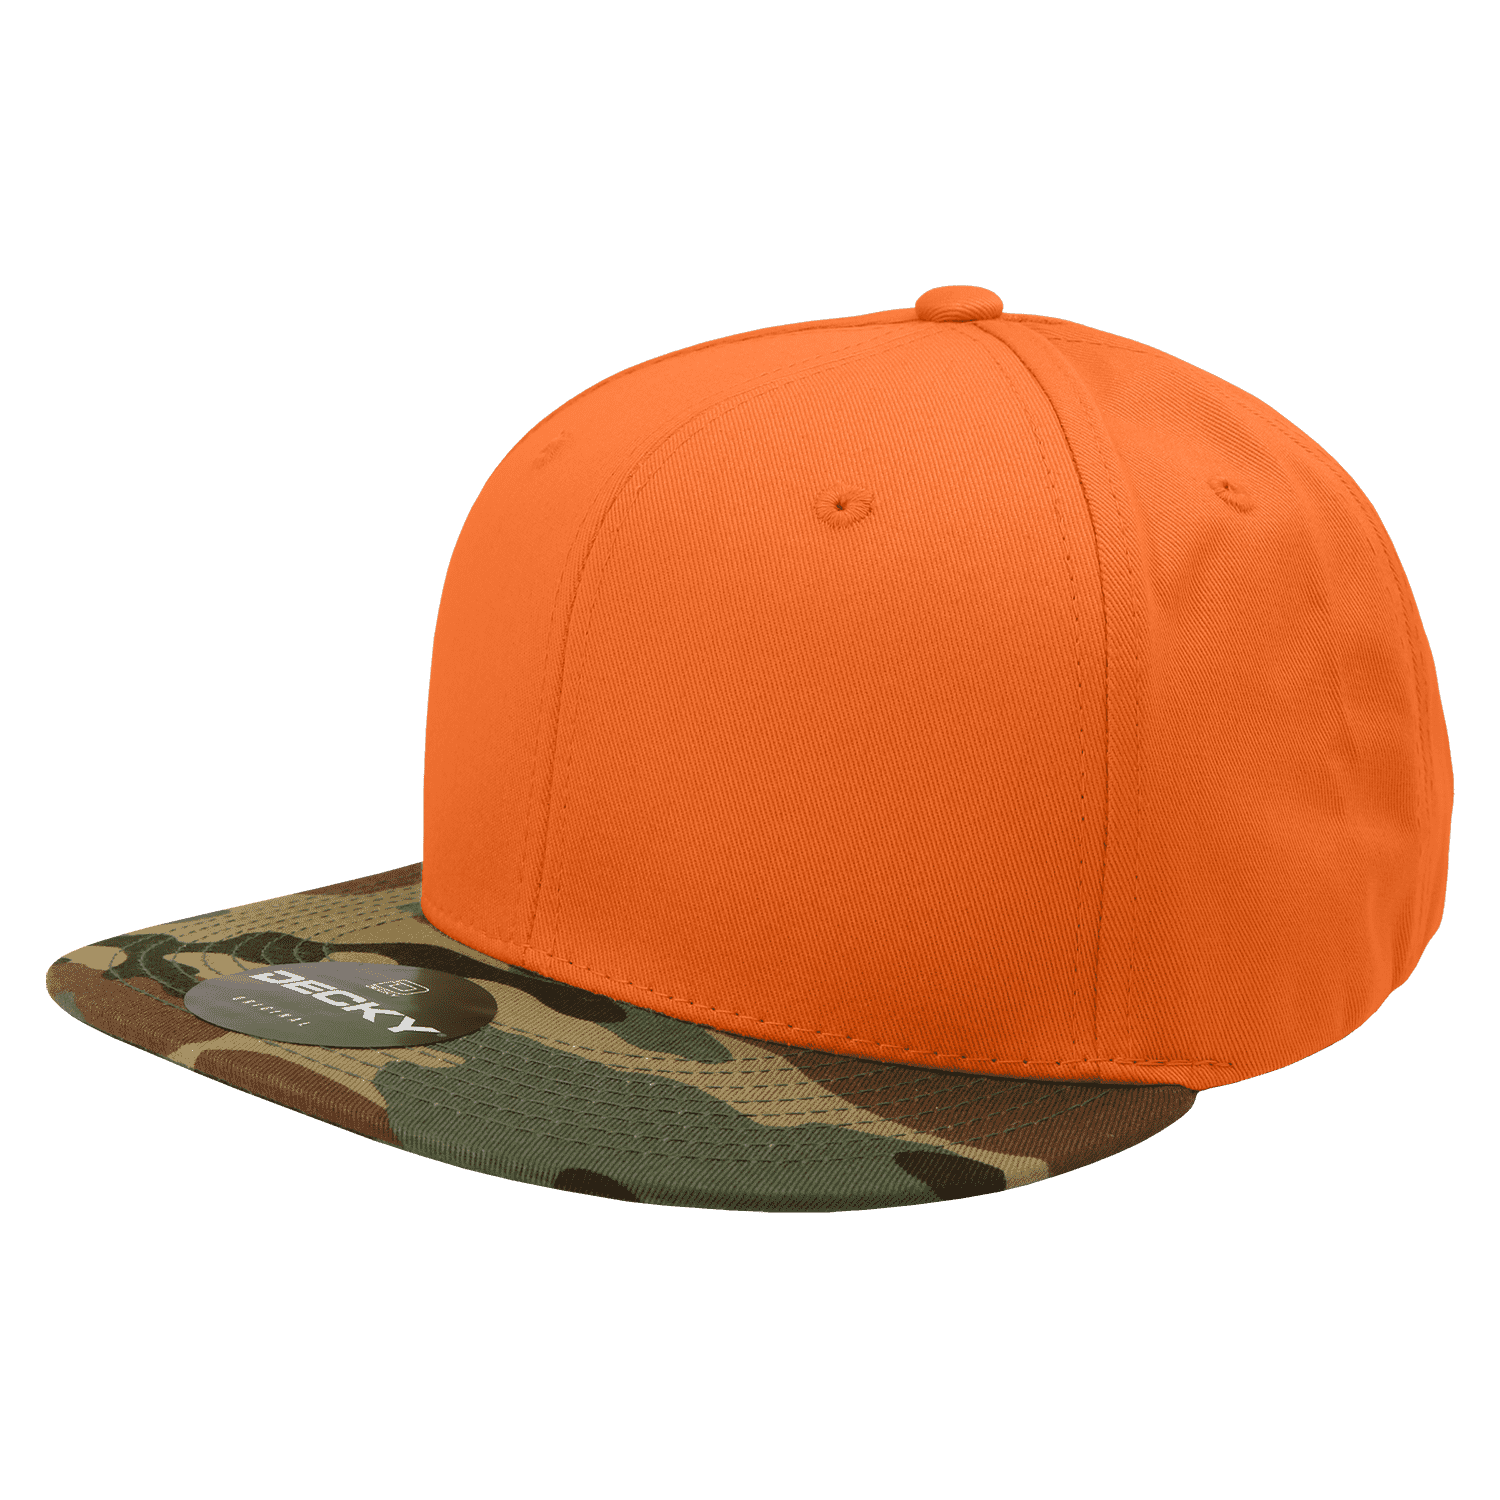 Decky 1047 Digital Camo Snapback Cap - Woodland Orange - HIT a Double - 1